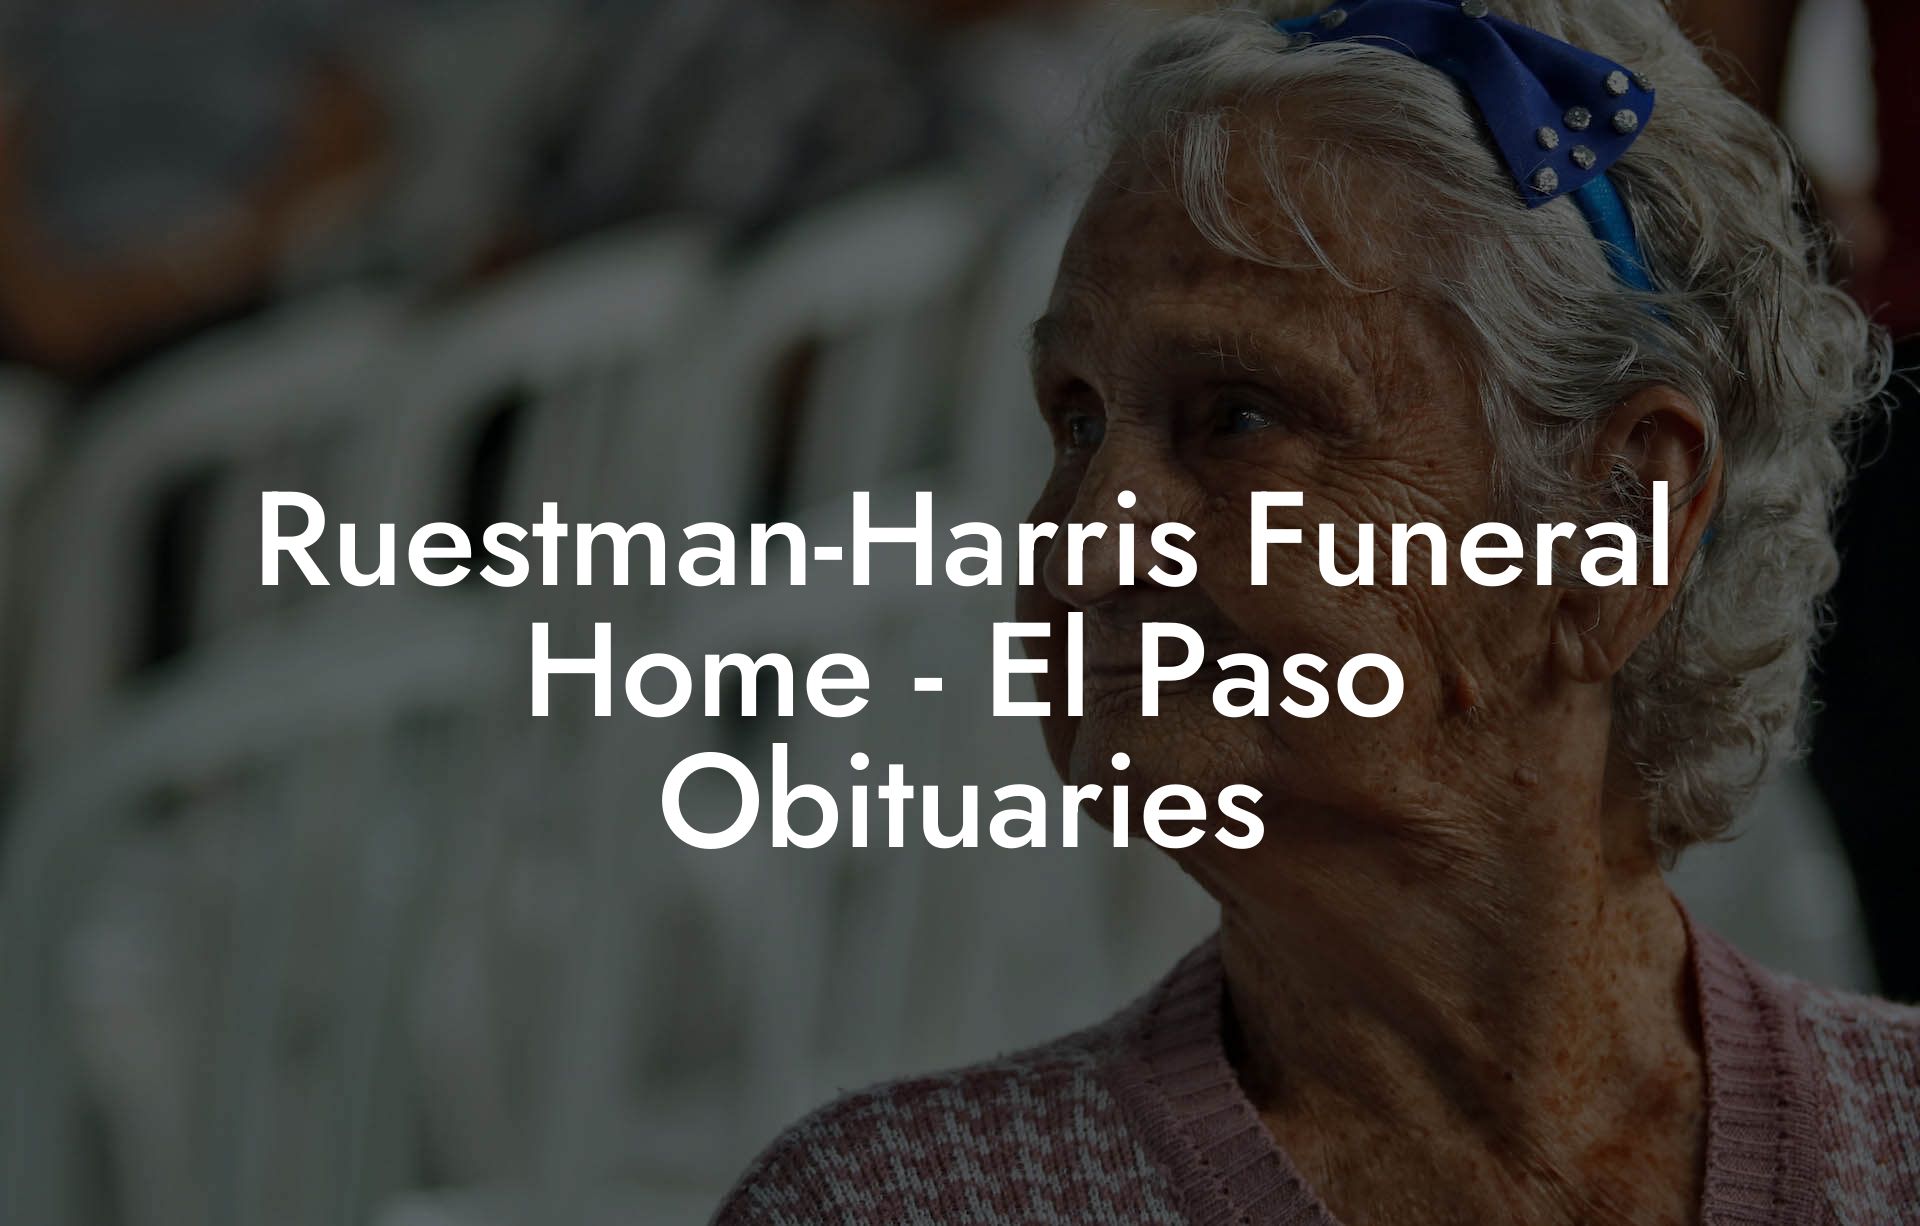 Ruestman-Harris Funeral Home - El Paso Obituaries